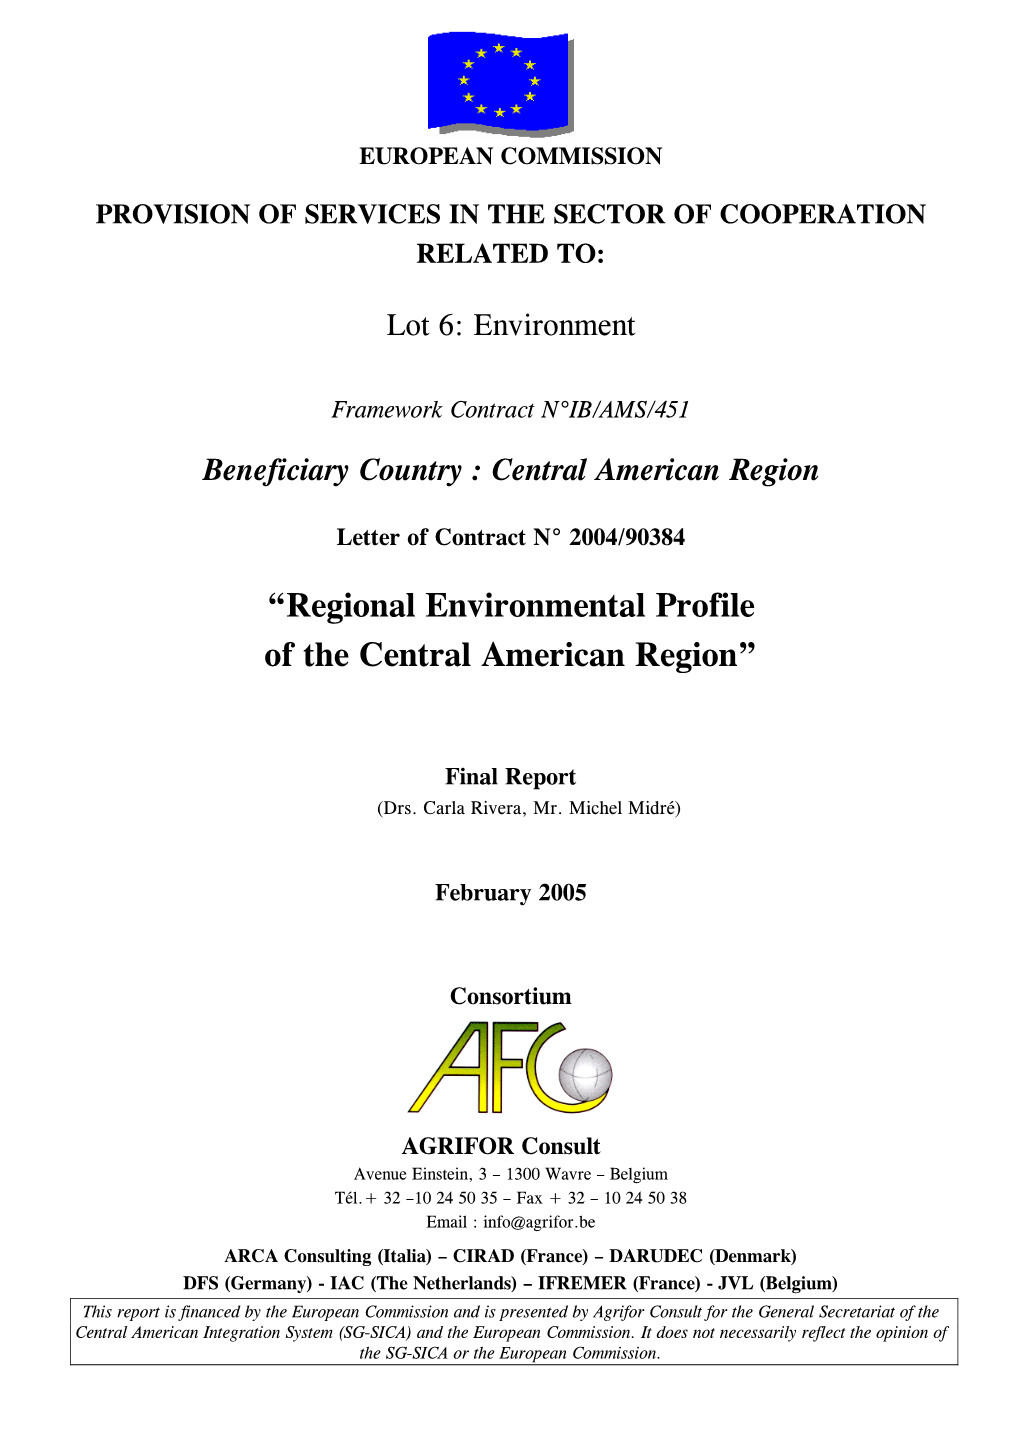 “Regional Environmental Profile of the Central American Region”